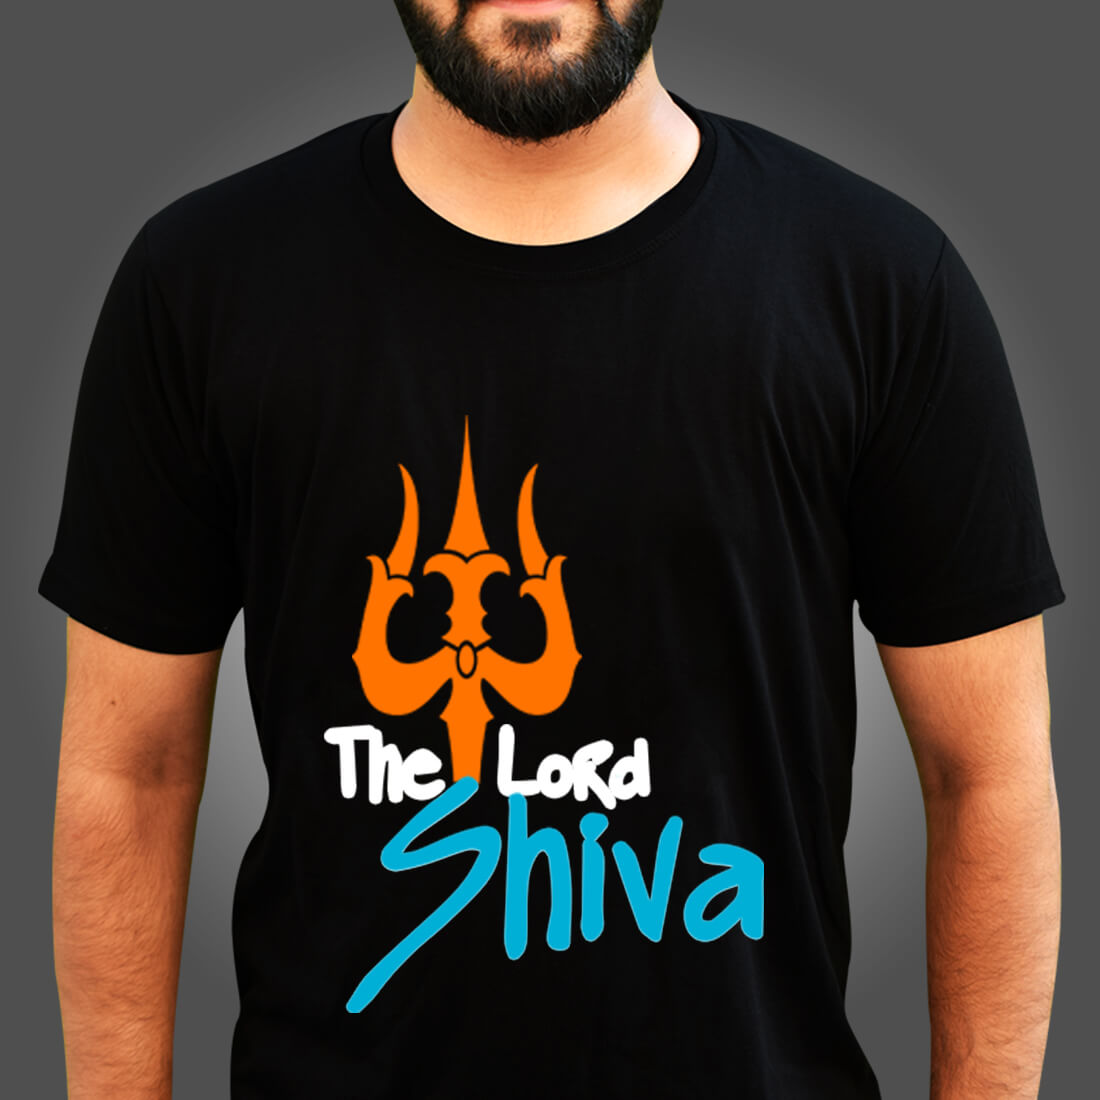 The Lord Shiva Printed Black T-Shirt for Men